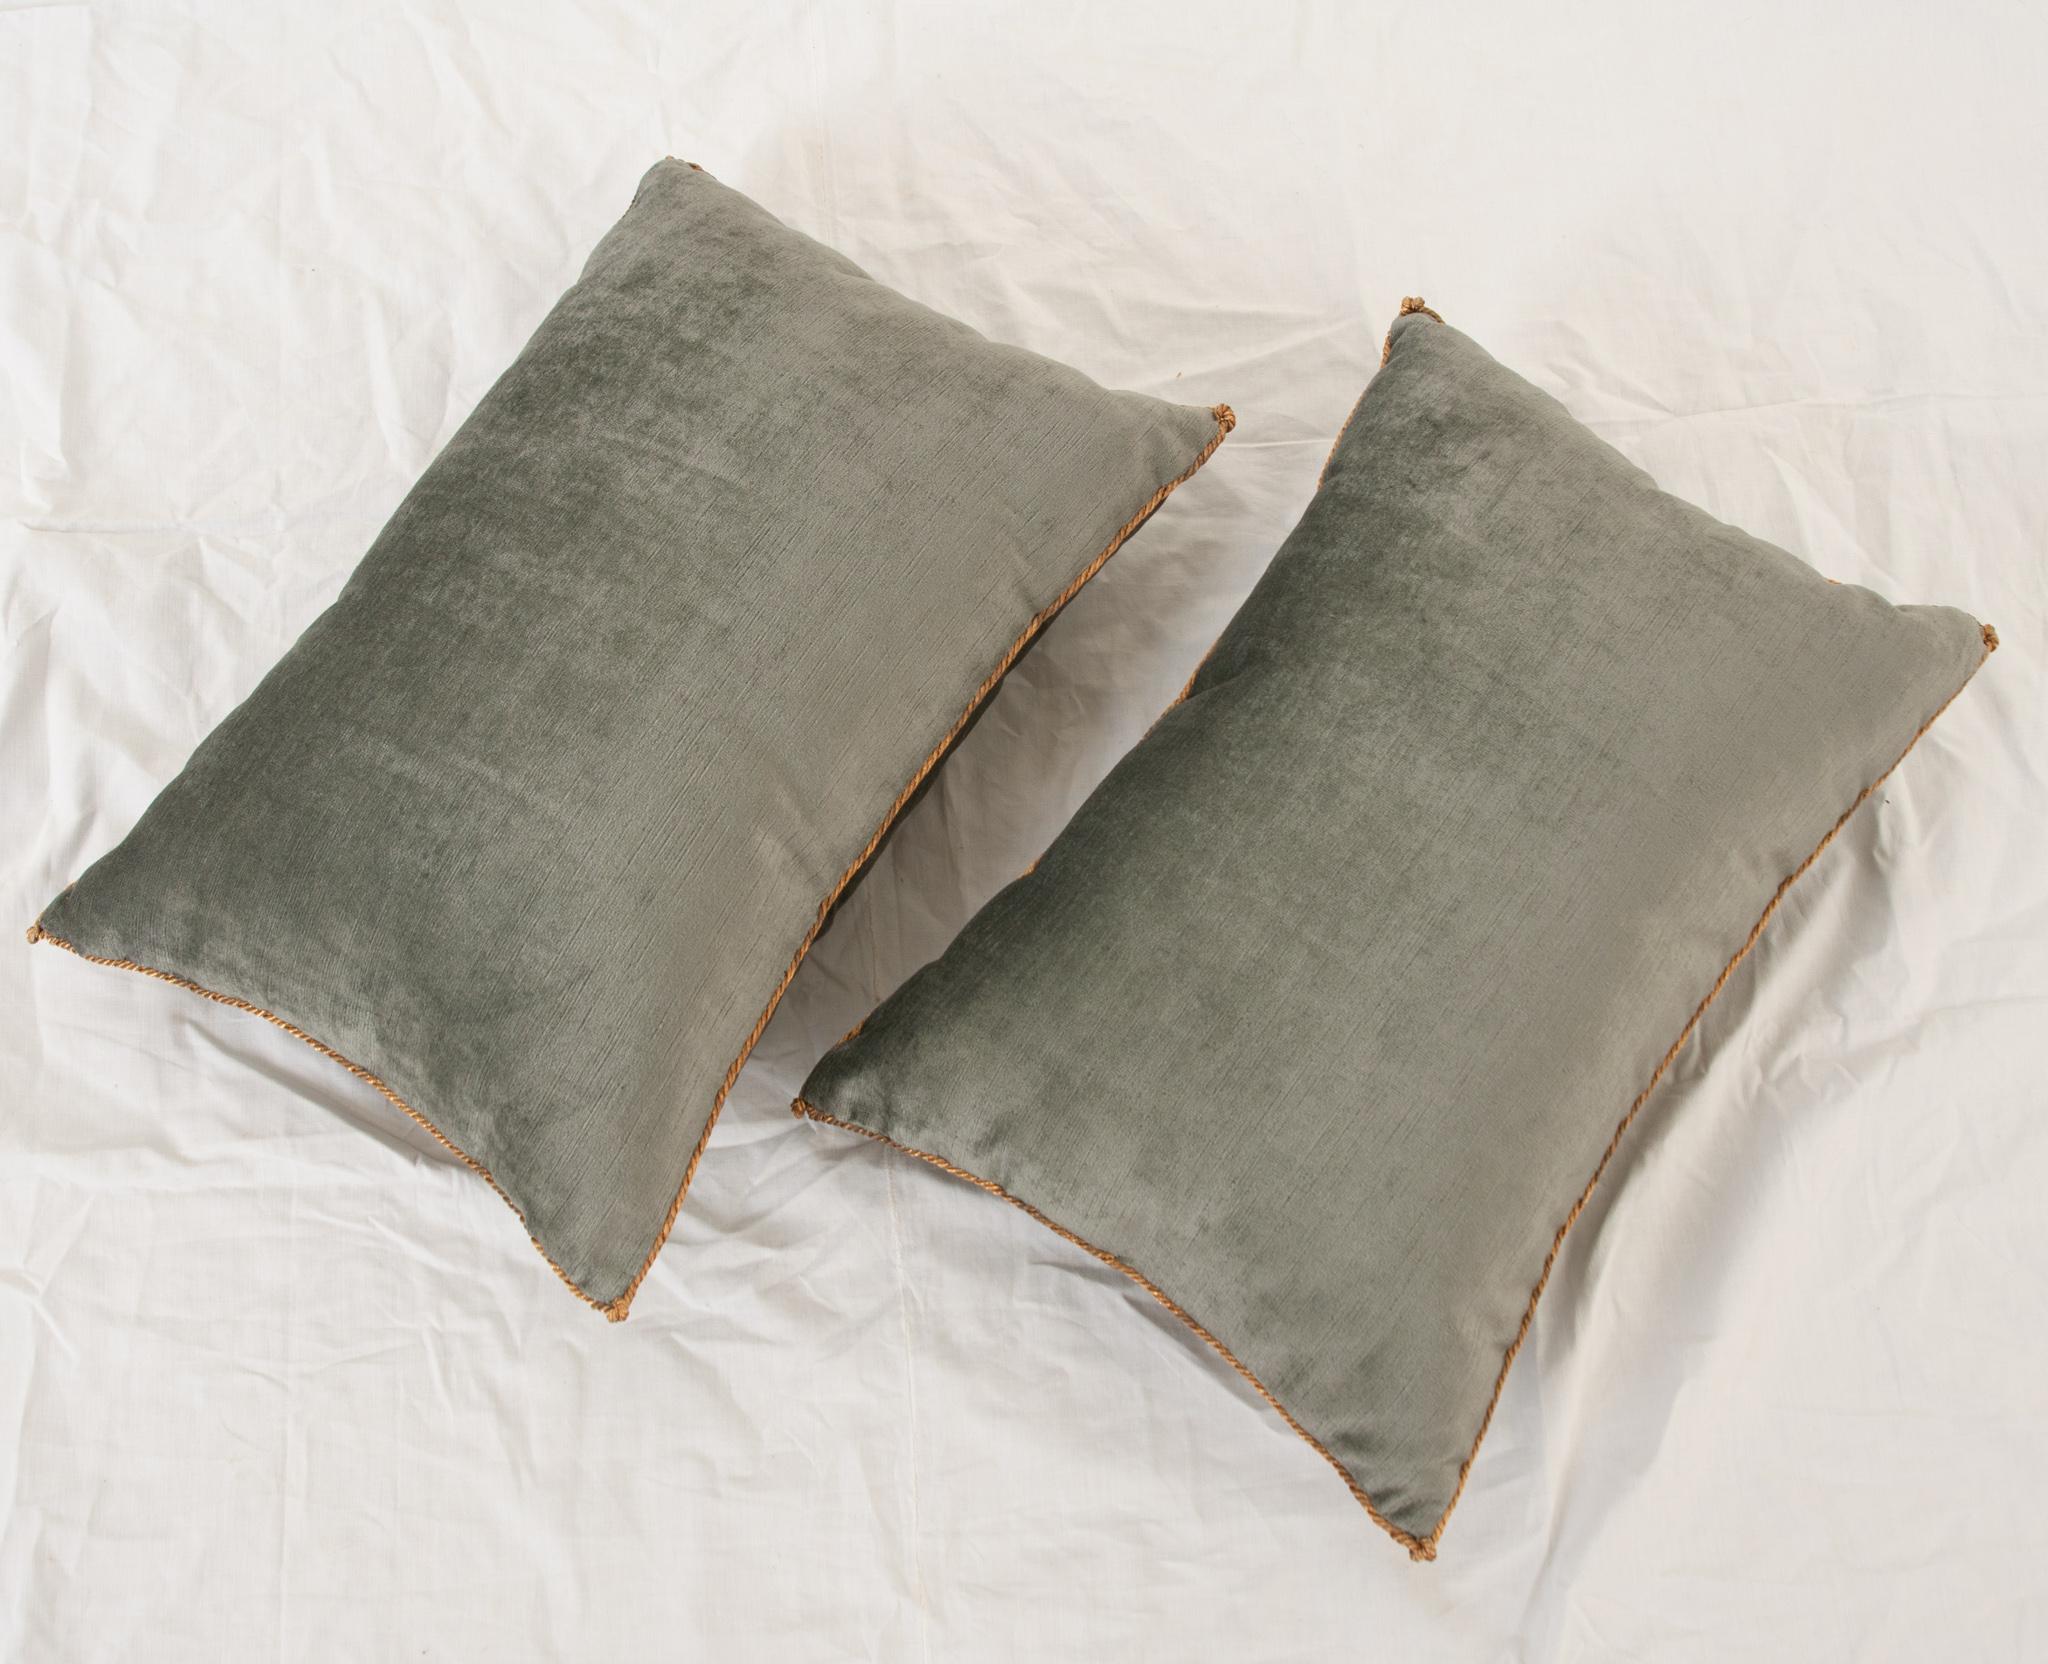 19th Century B.VIZ Pair of Antique Raised Metallic Embroidery Pillows For Sale